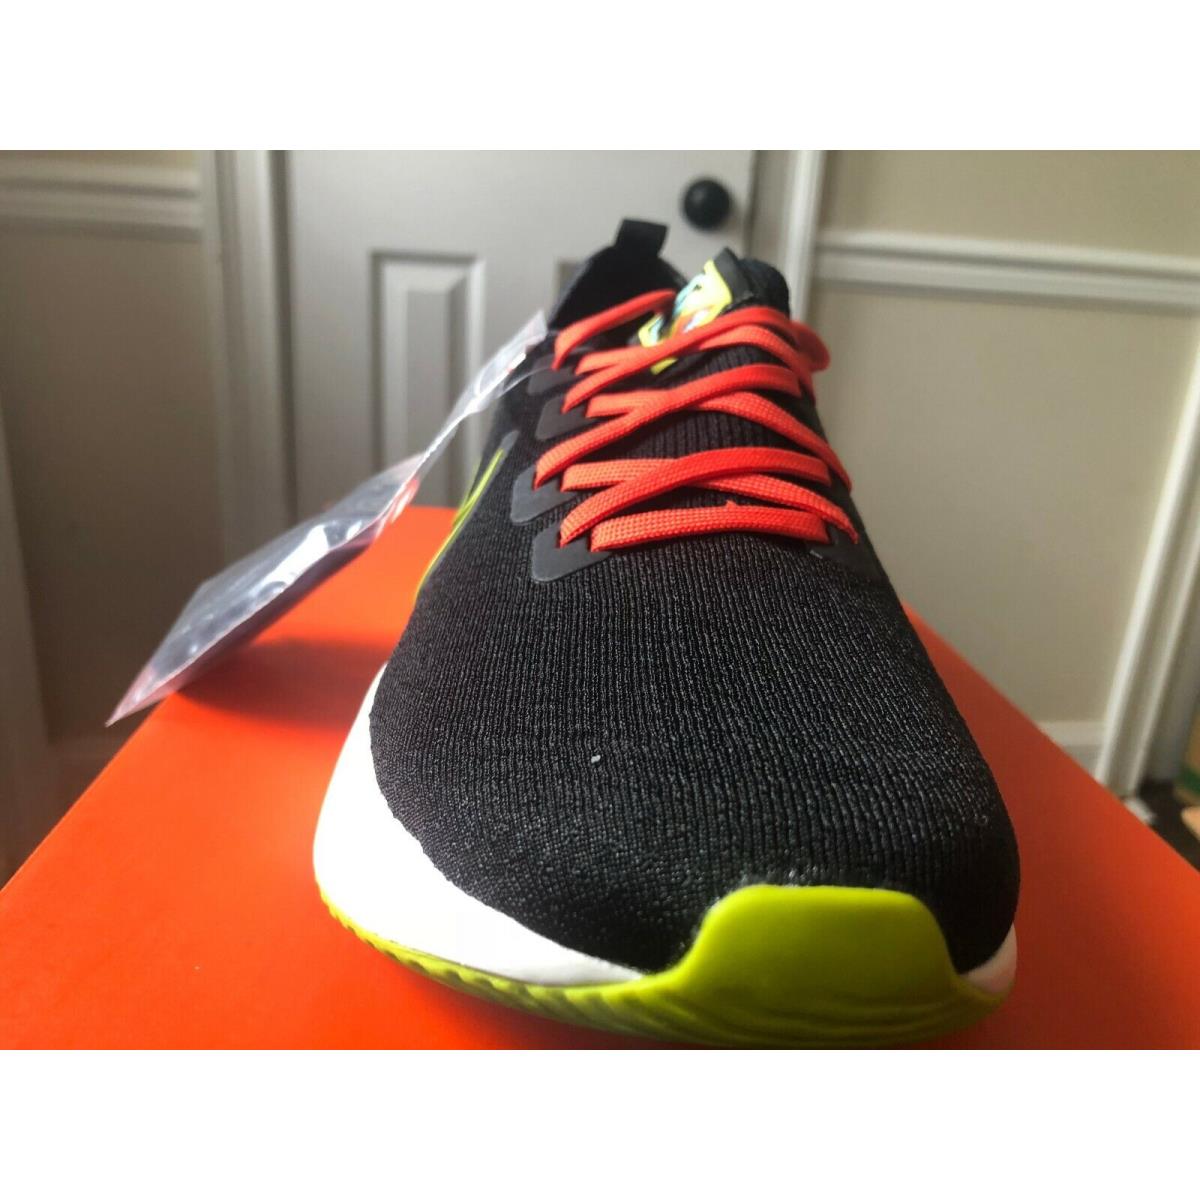 Nike shoes  - Black/Bright Cactus/Sail 5